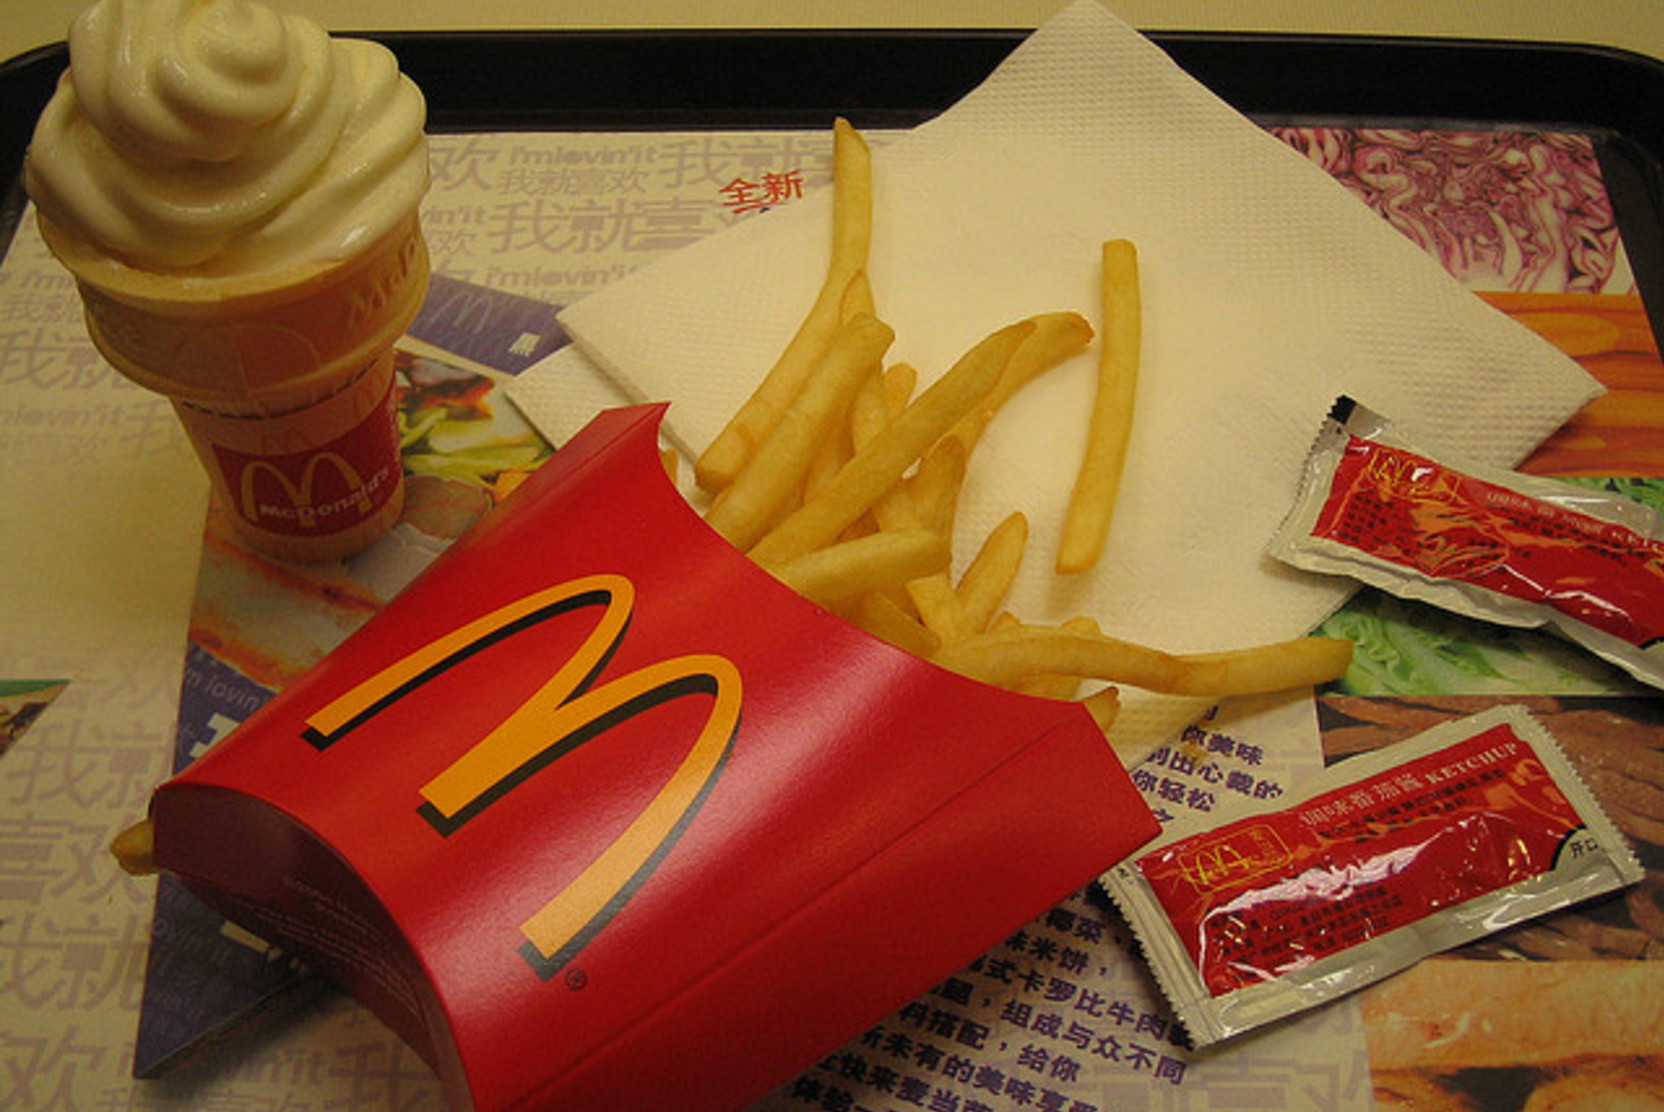       McDonalds